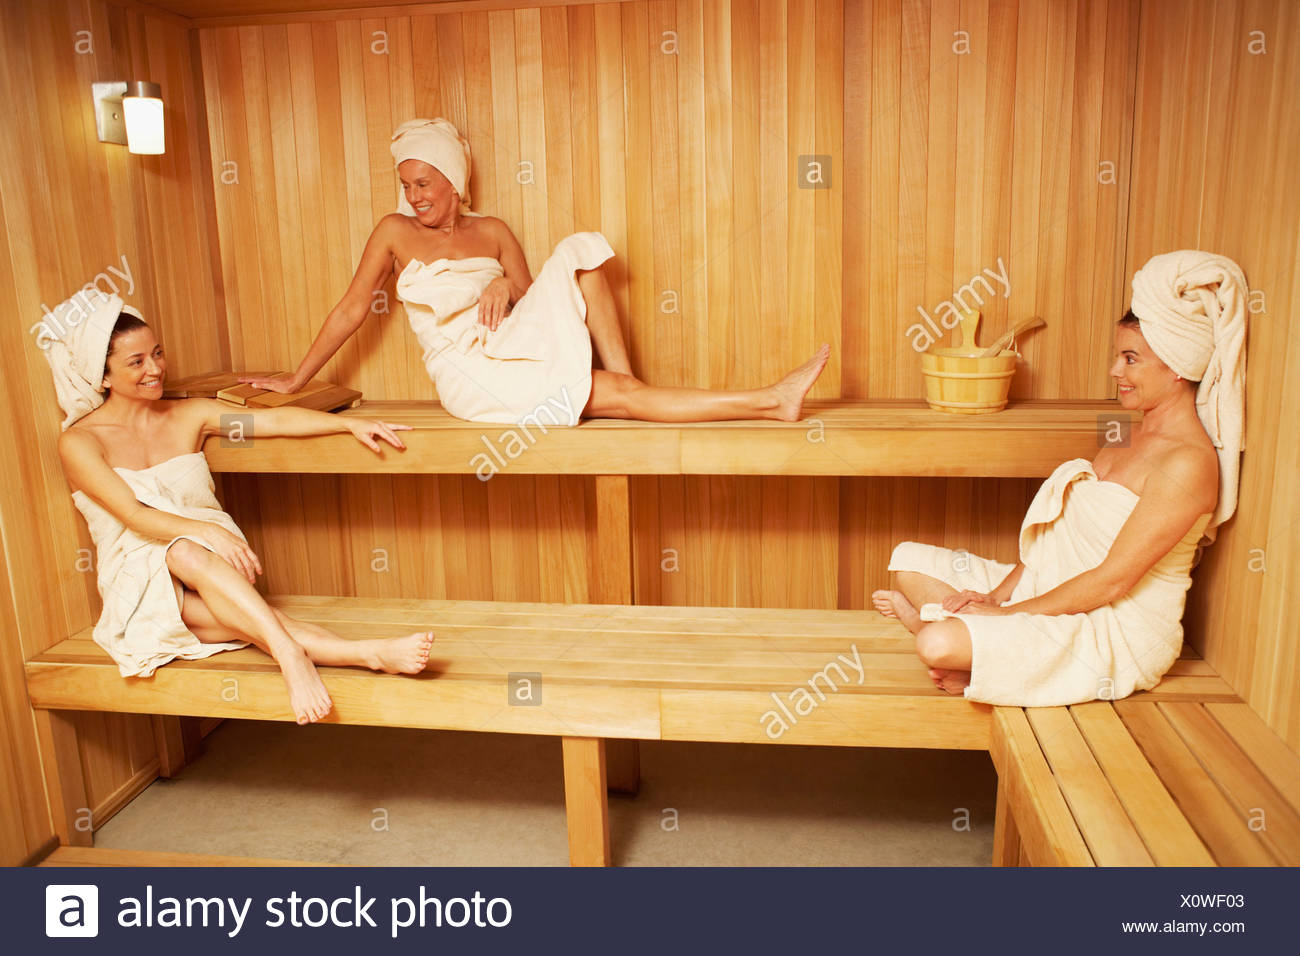 Junge Frau fickt in dampfender Sauna